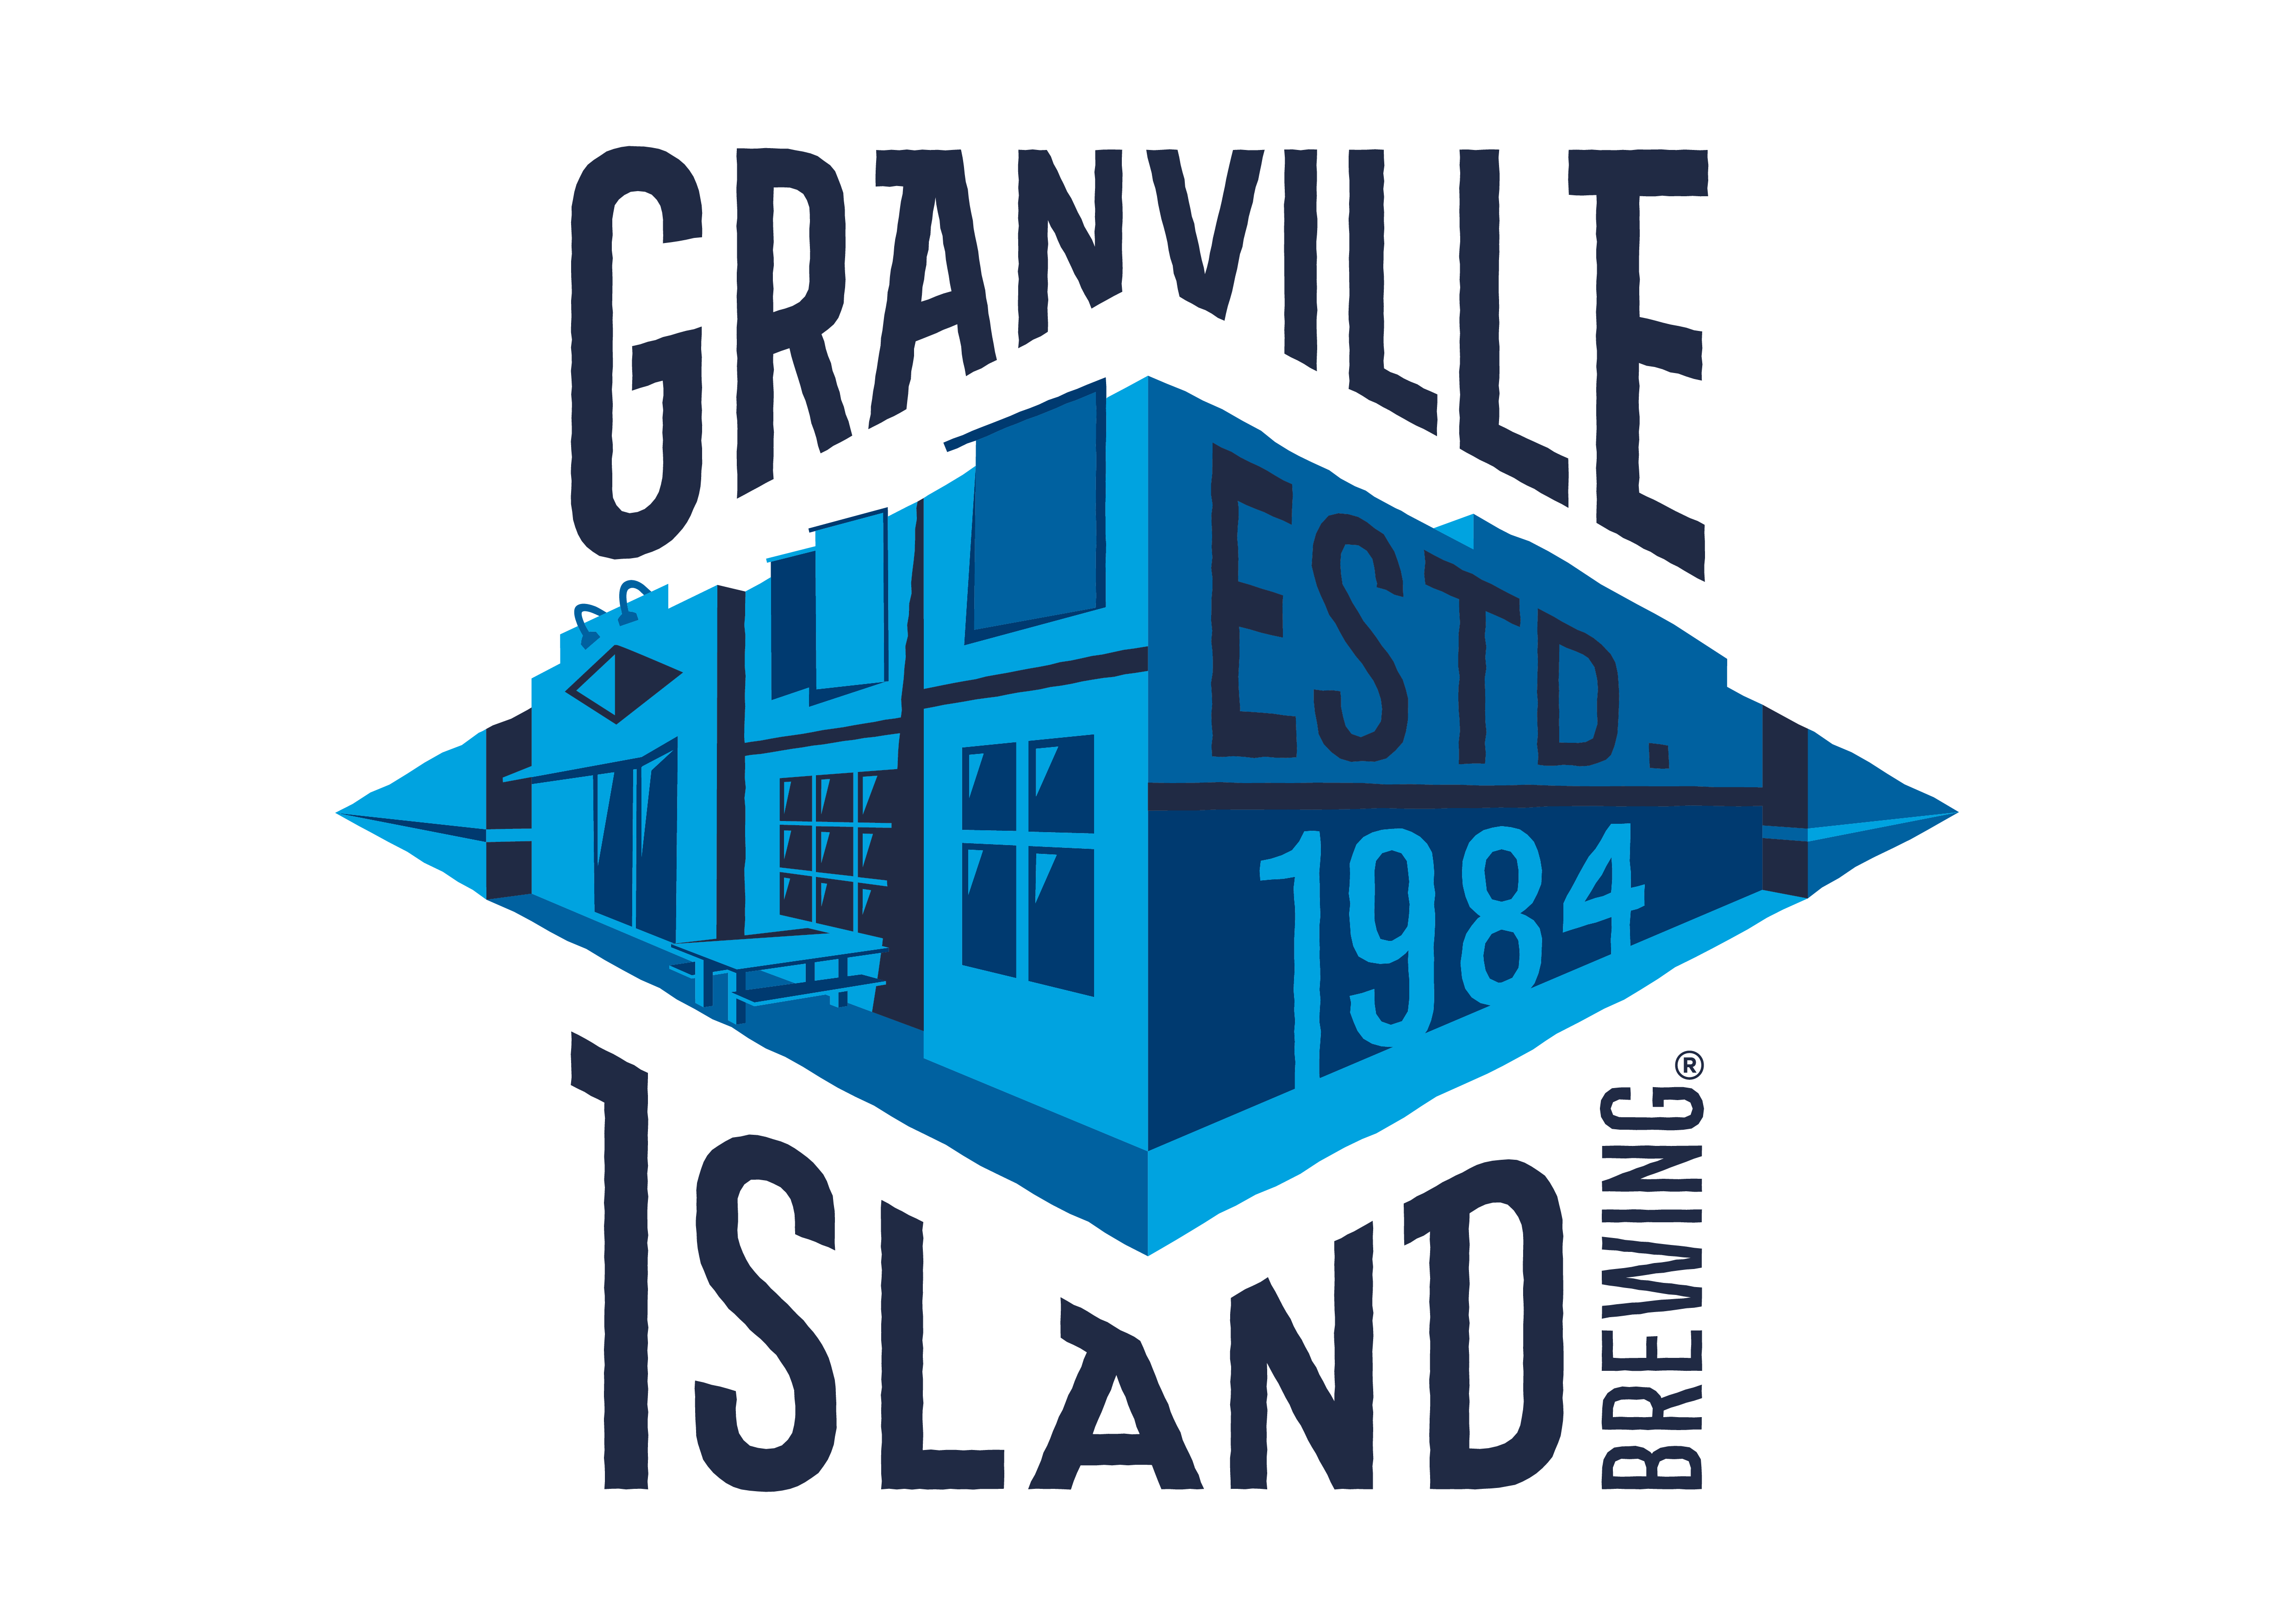 Granville Island Brewing logo